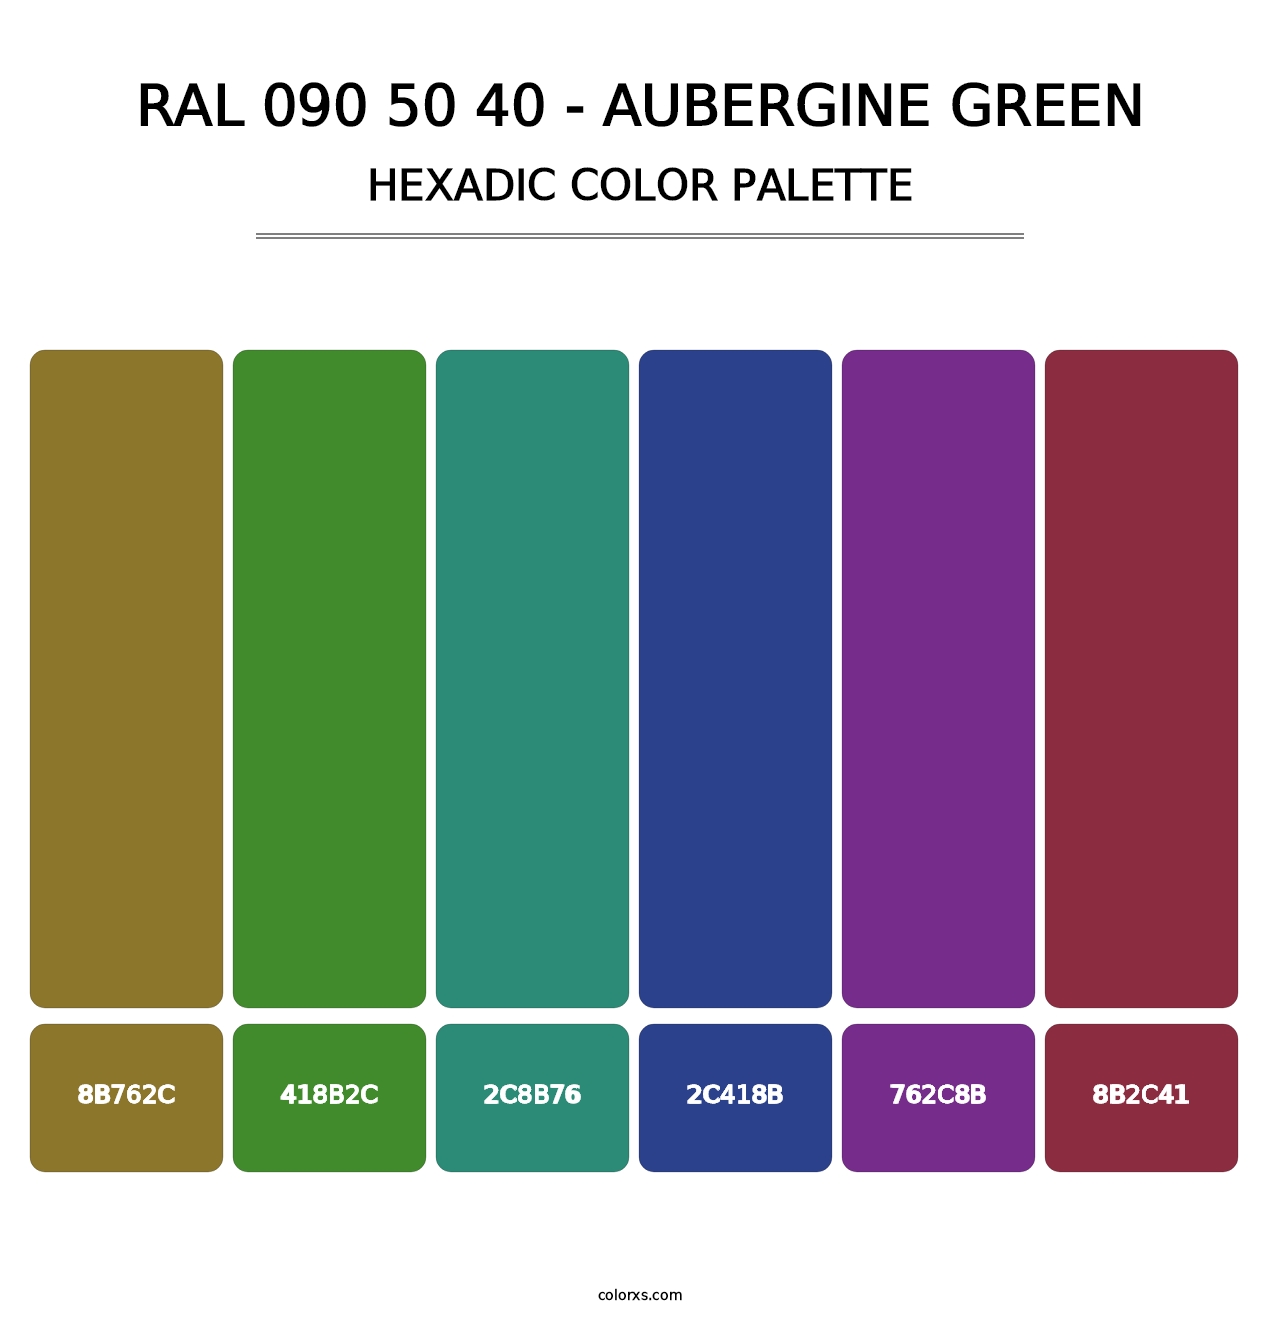 RAL 090 50 40 - Aubergine Green - Hexadic Color Palette